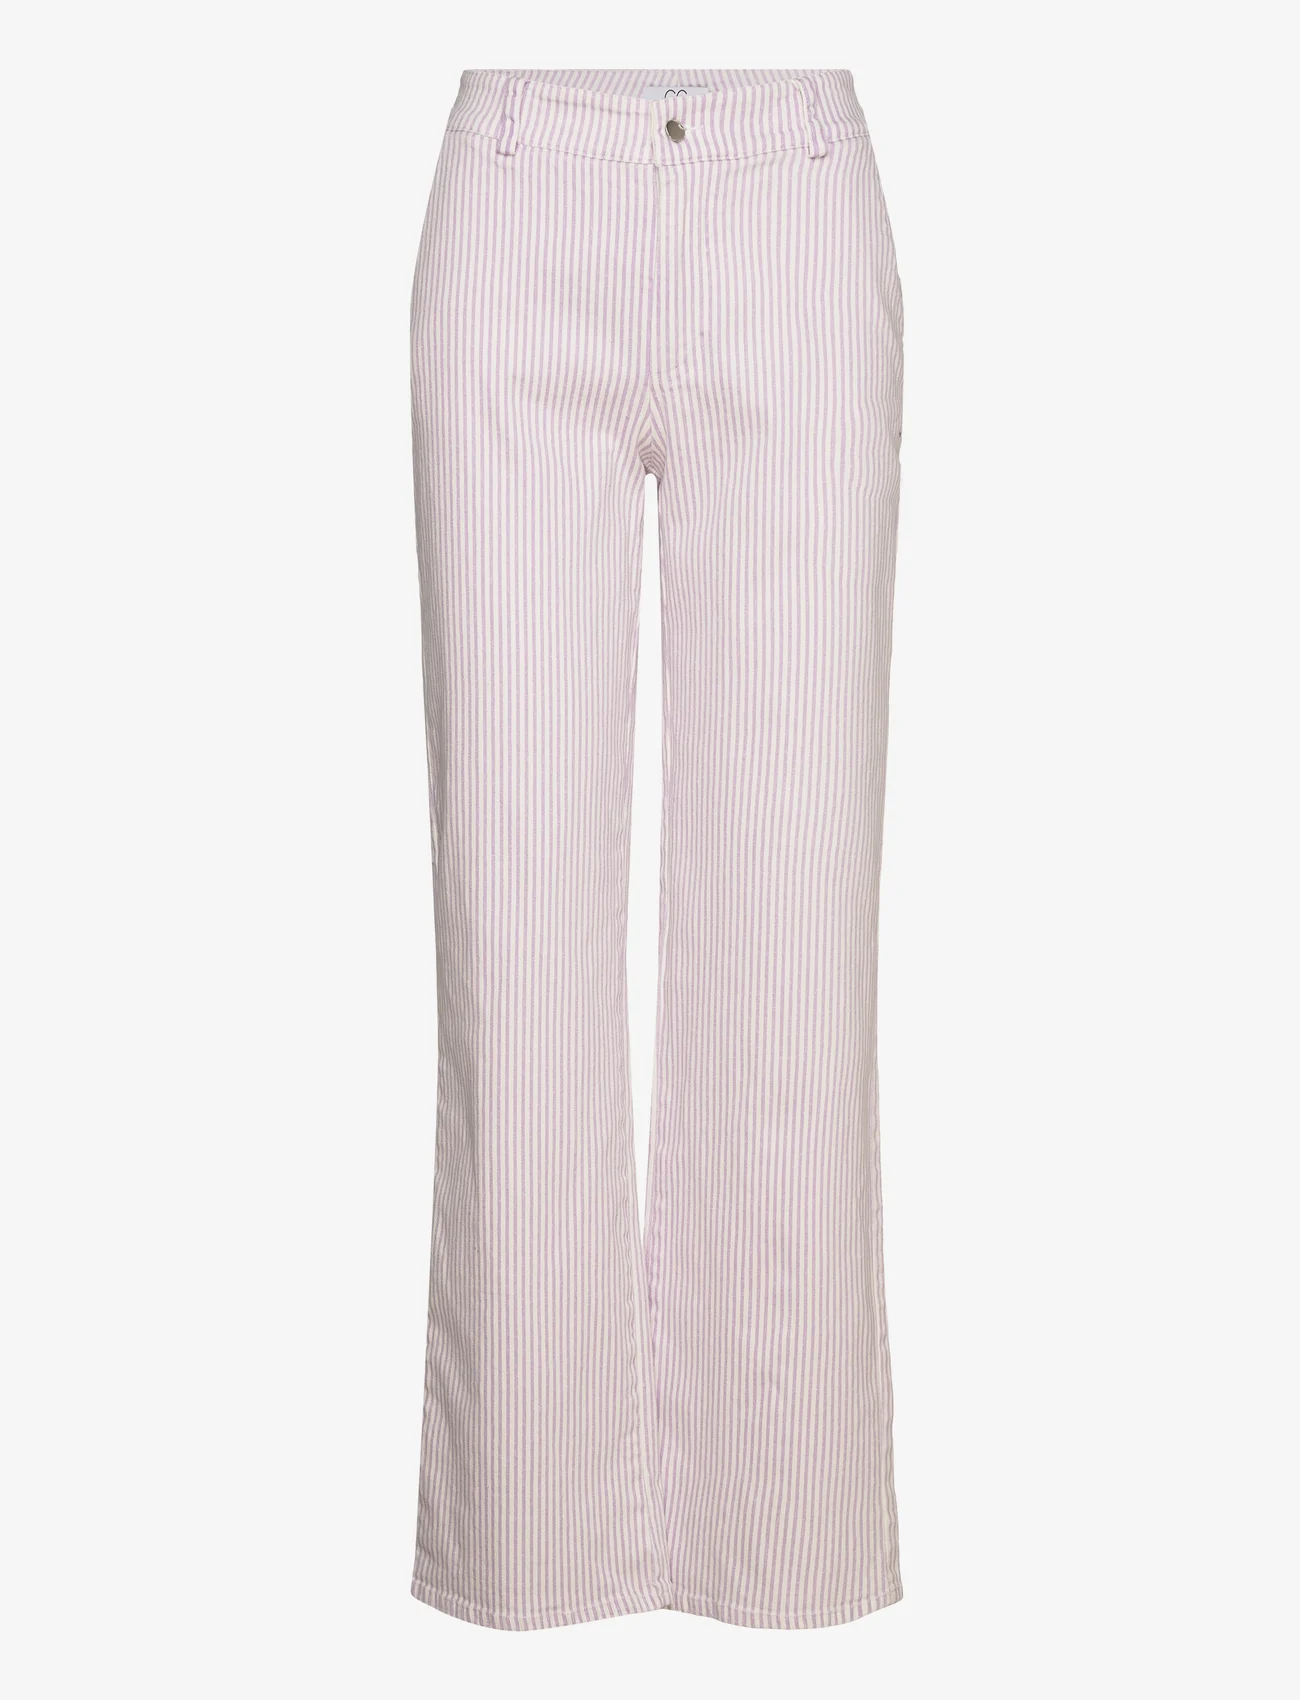 Coster Copenhagen - CC Heart MATHILDE striped pants - odzież imprezowa w cenach outletowych - off white/purple stripe - 0